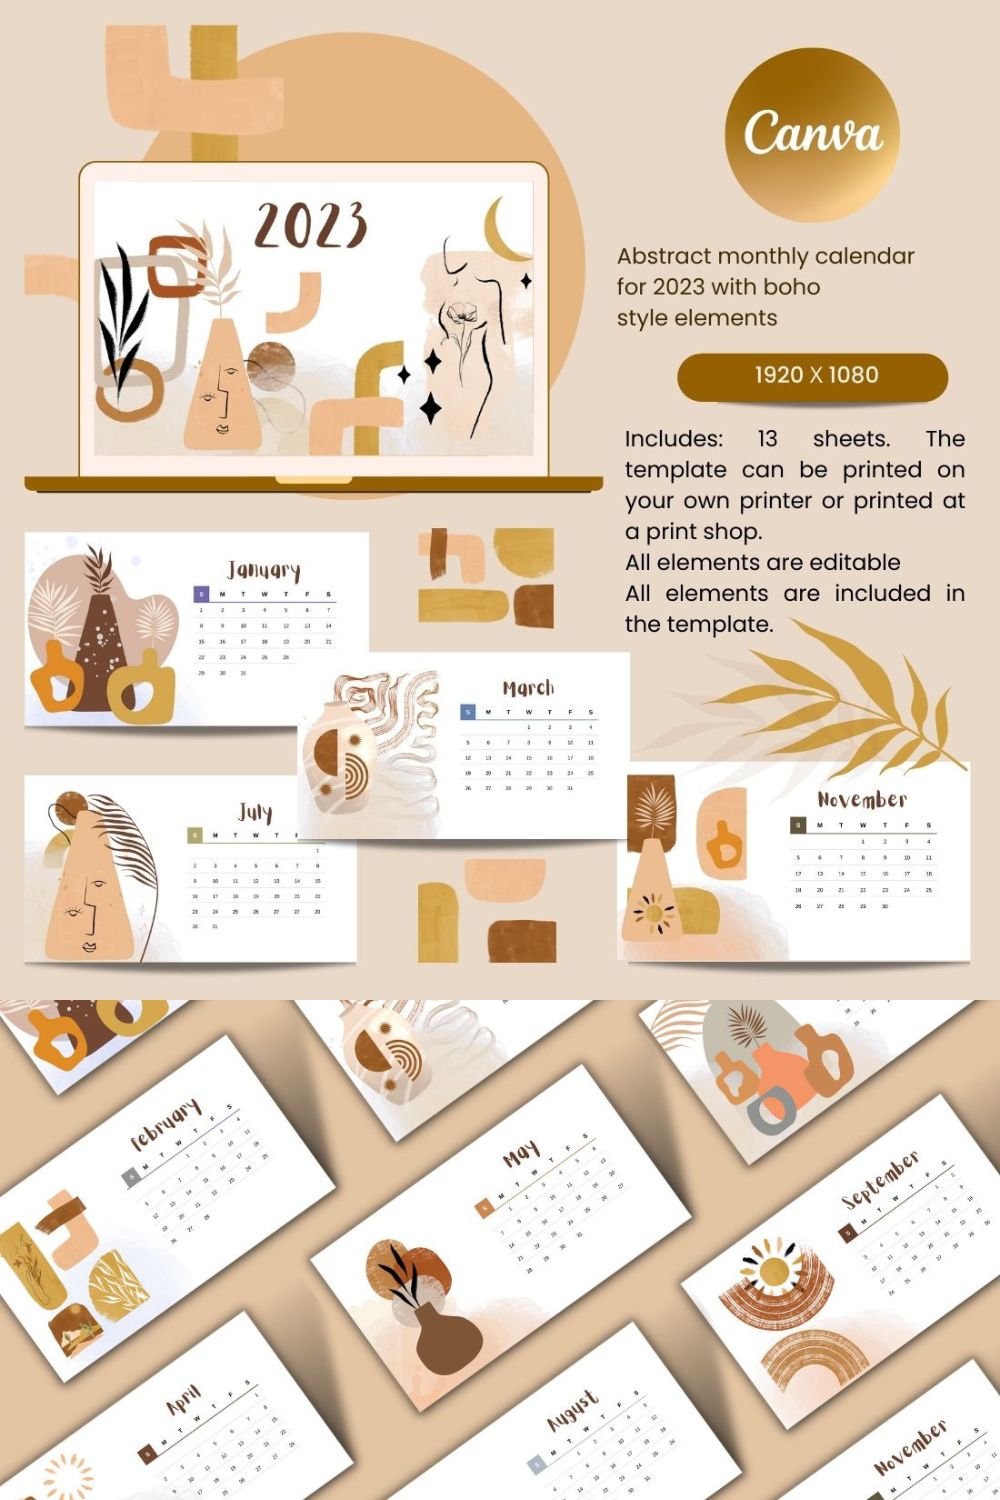 pinterest Desktop Calendar 2023 with Abstract Boho Elements